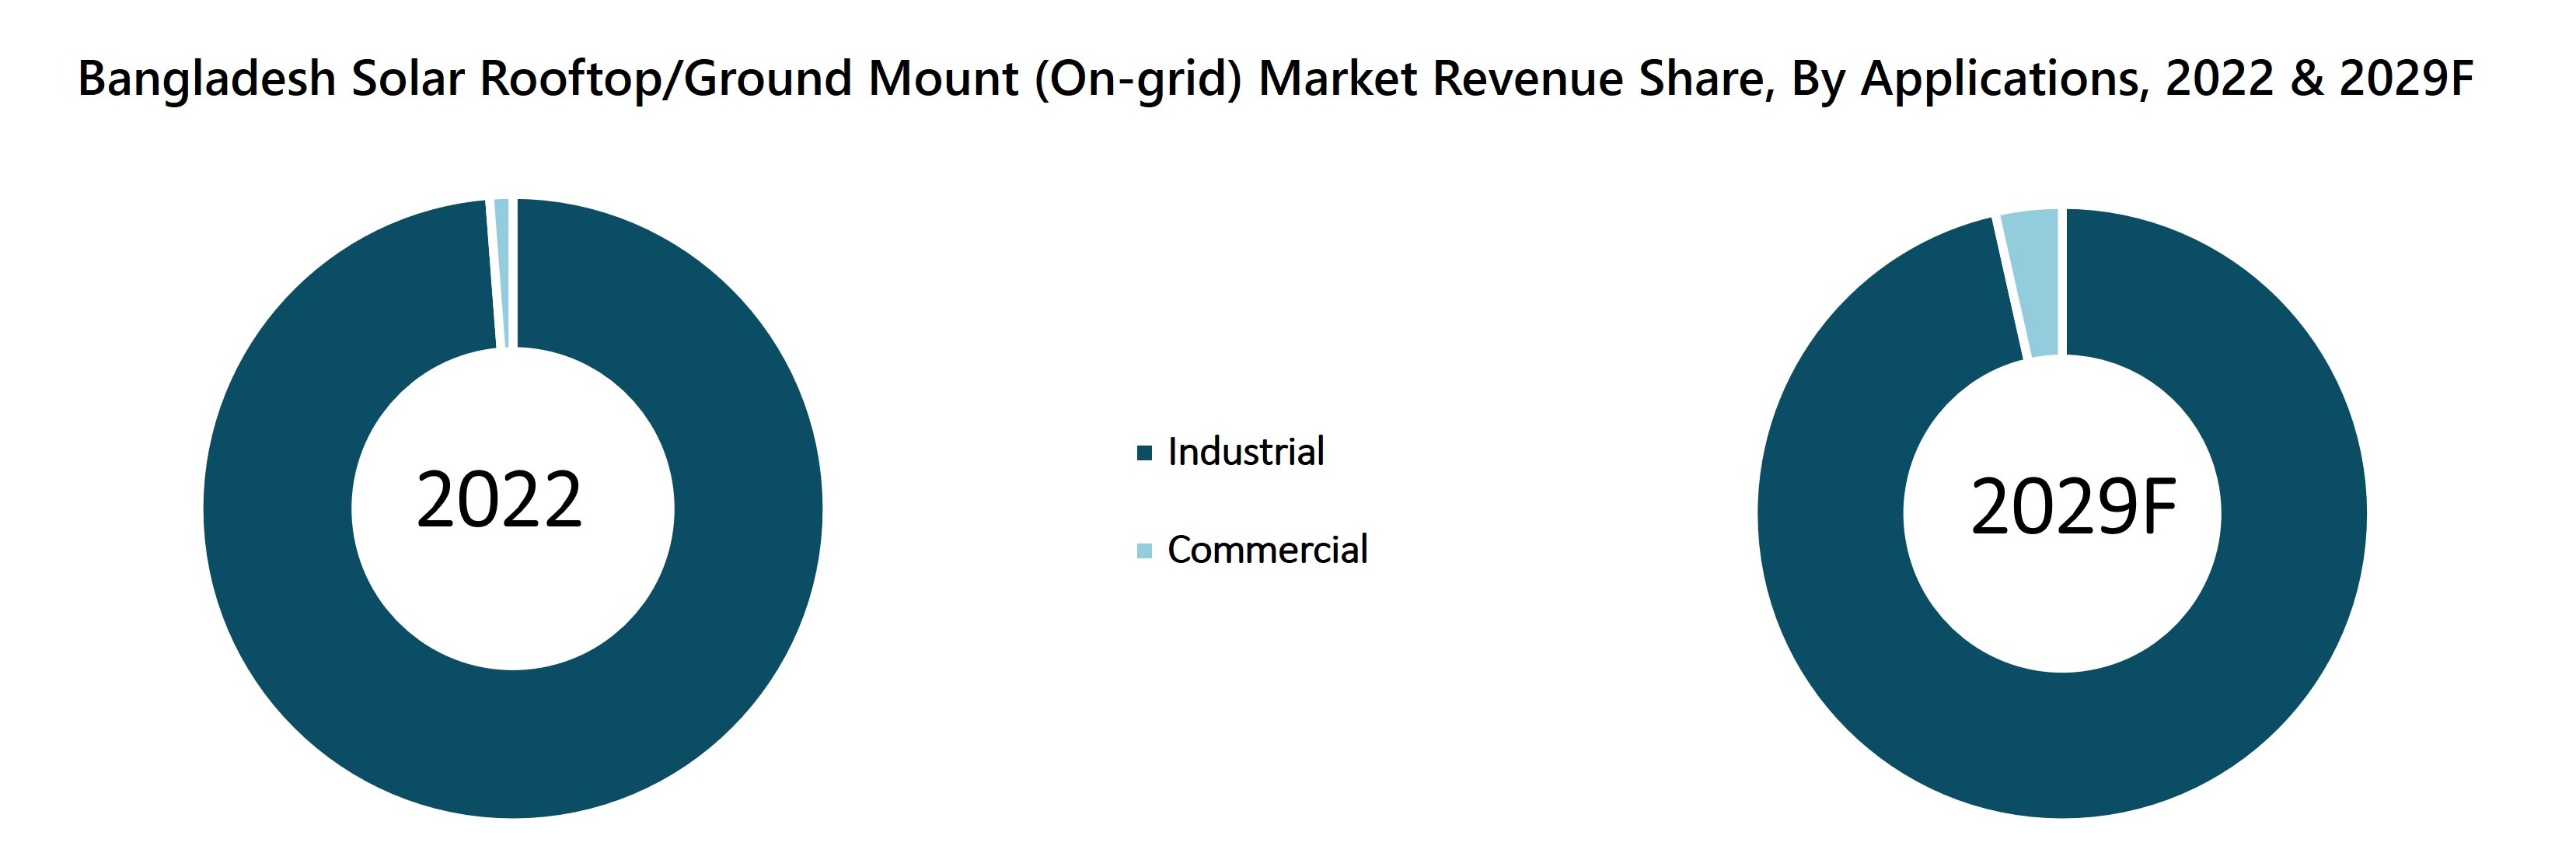 Bangladesh Solar Rooftop/Ground Mount (On-grid) Market Revenue Share